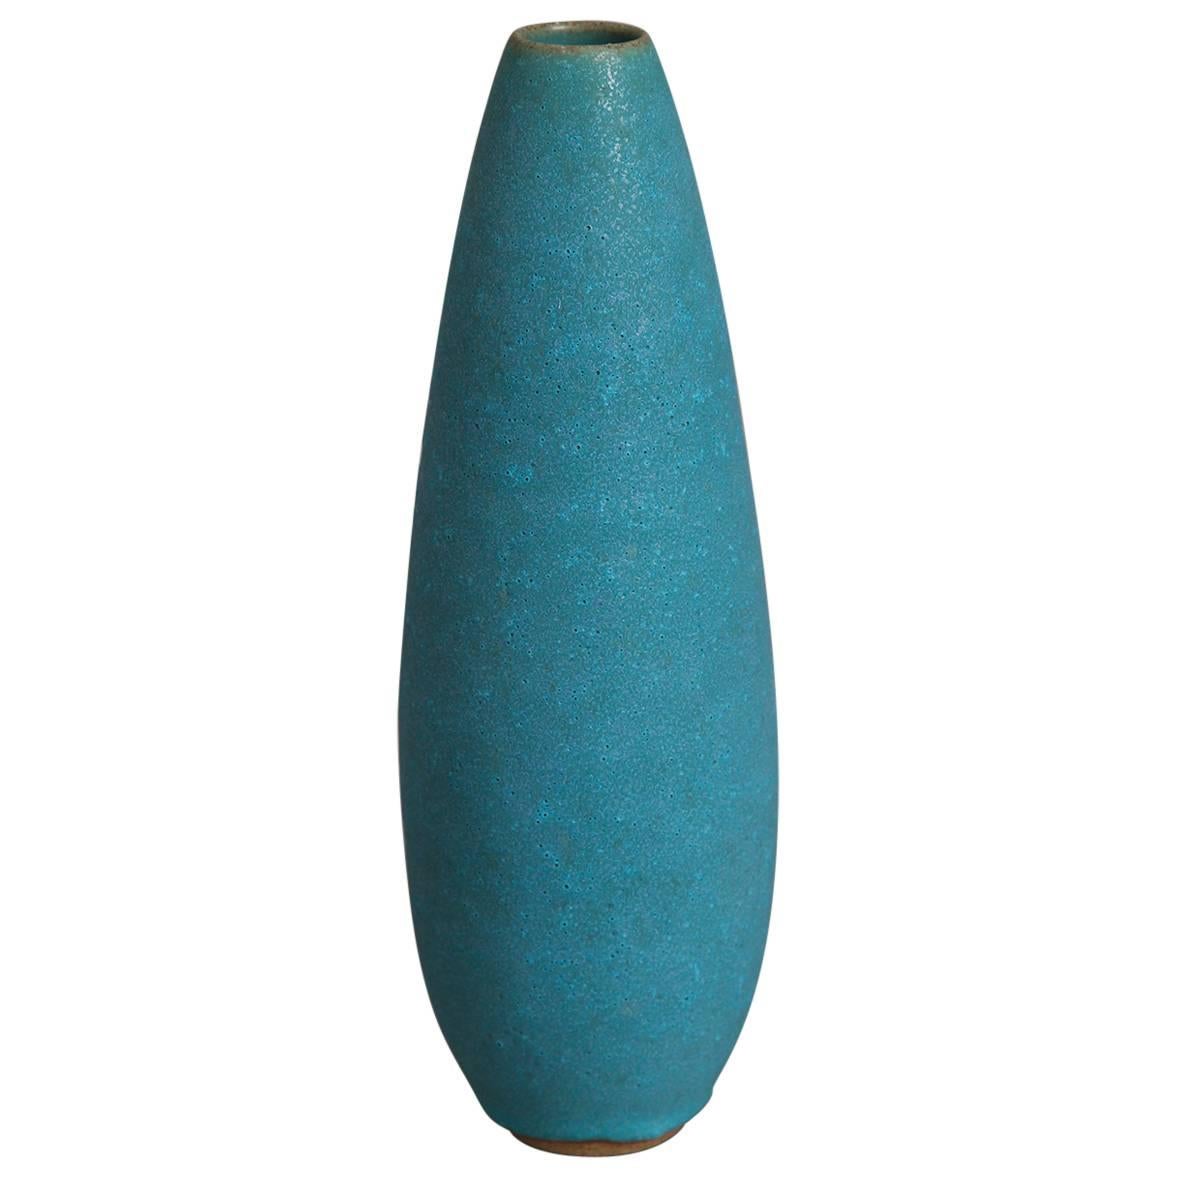 Sandra Zeenni Turquoise Ceramic Vase